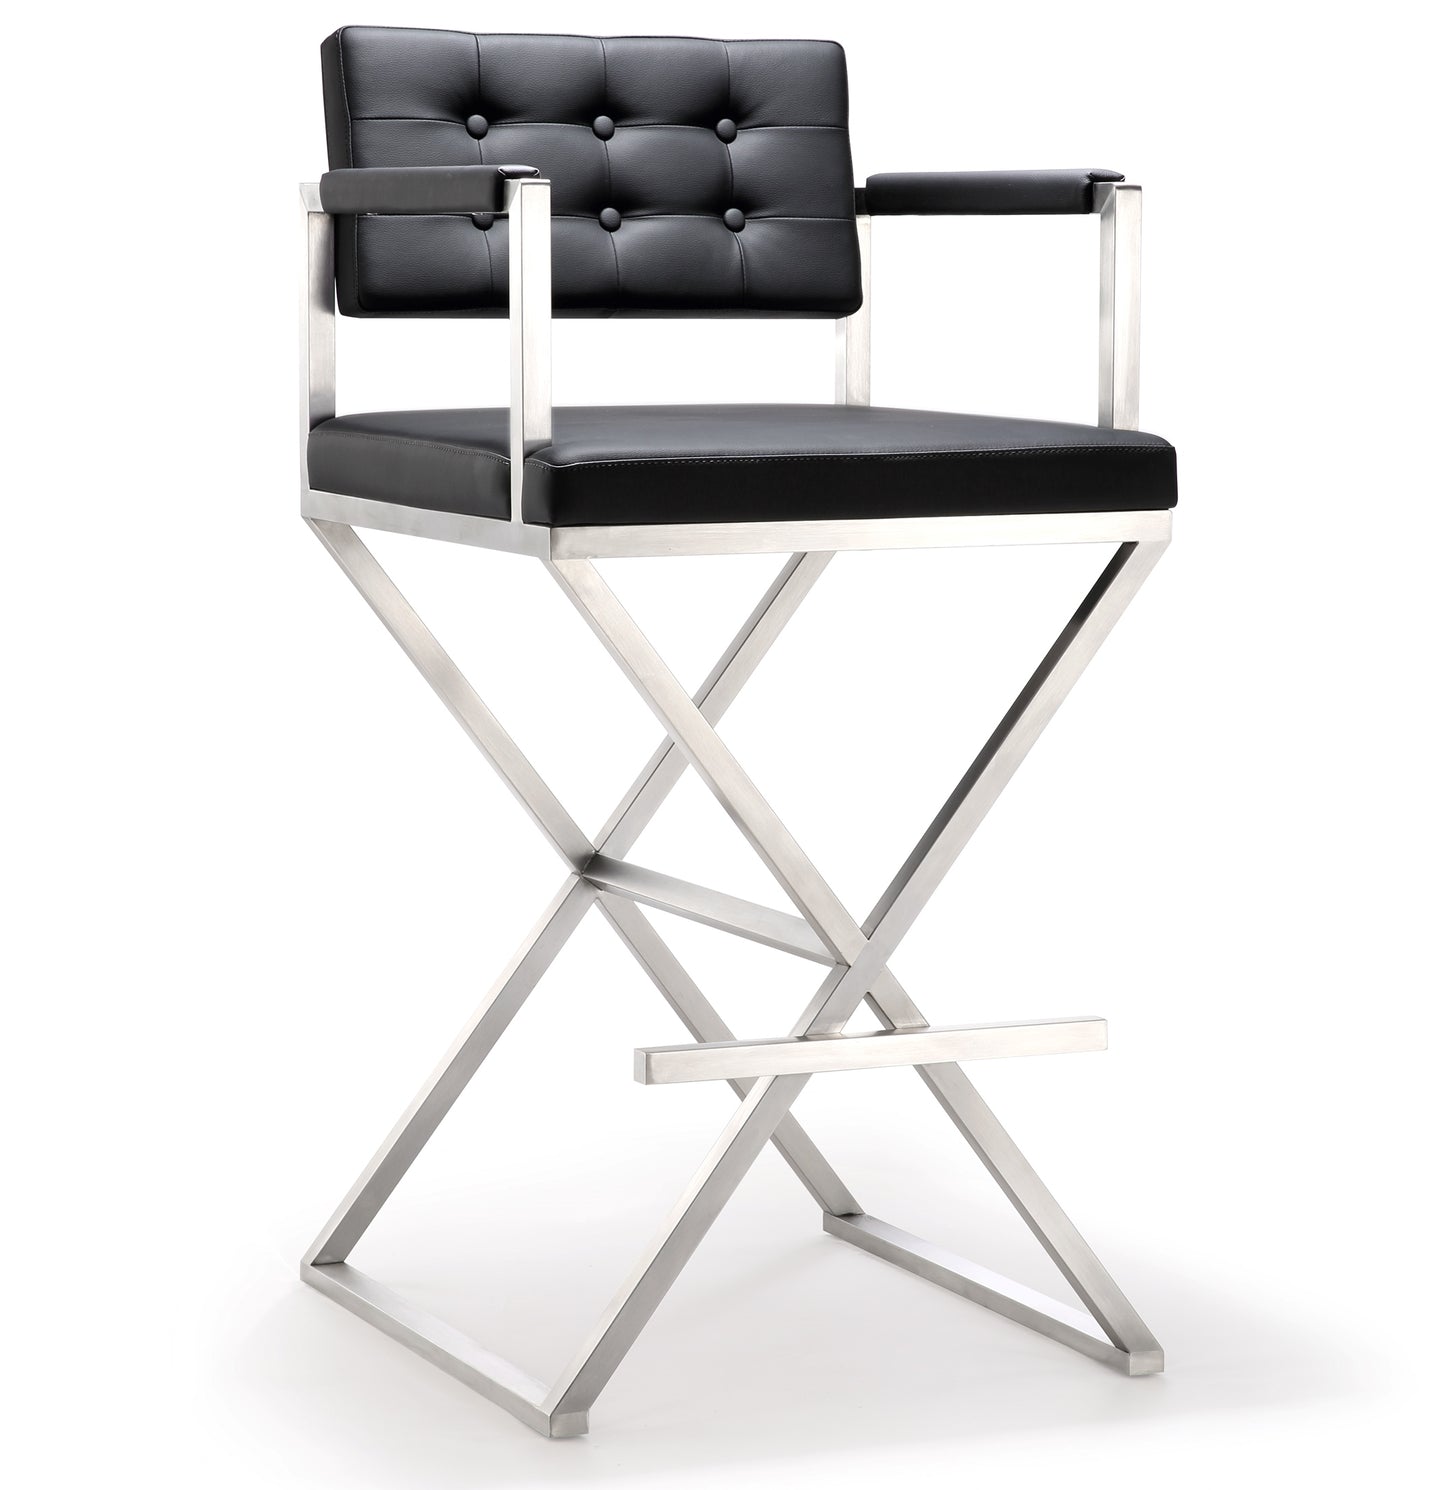 Tov Furniture Director Black Stainless Steel Barstool